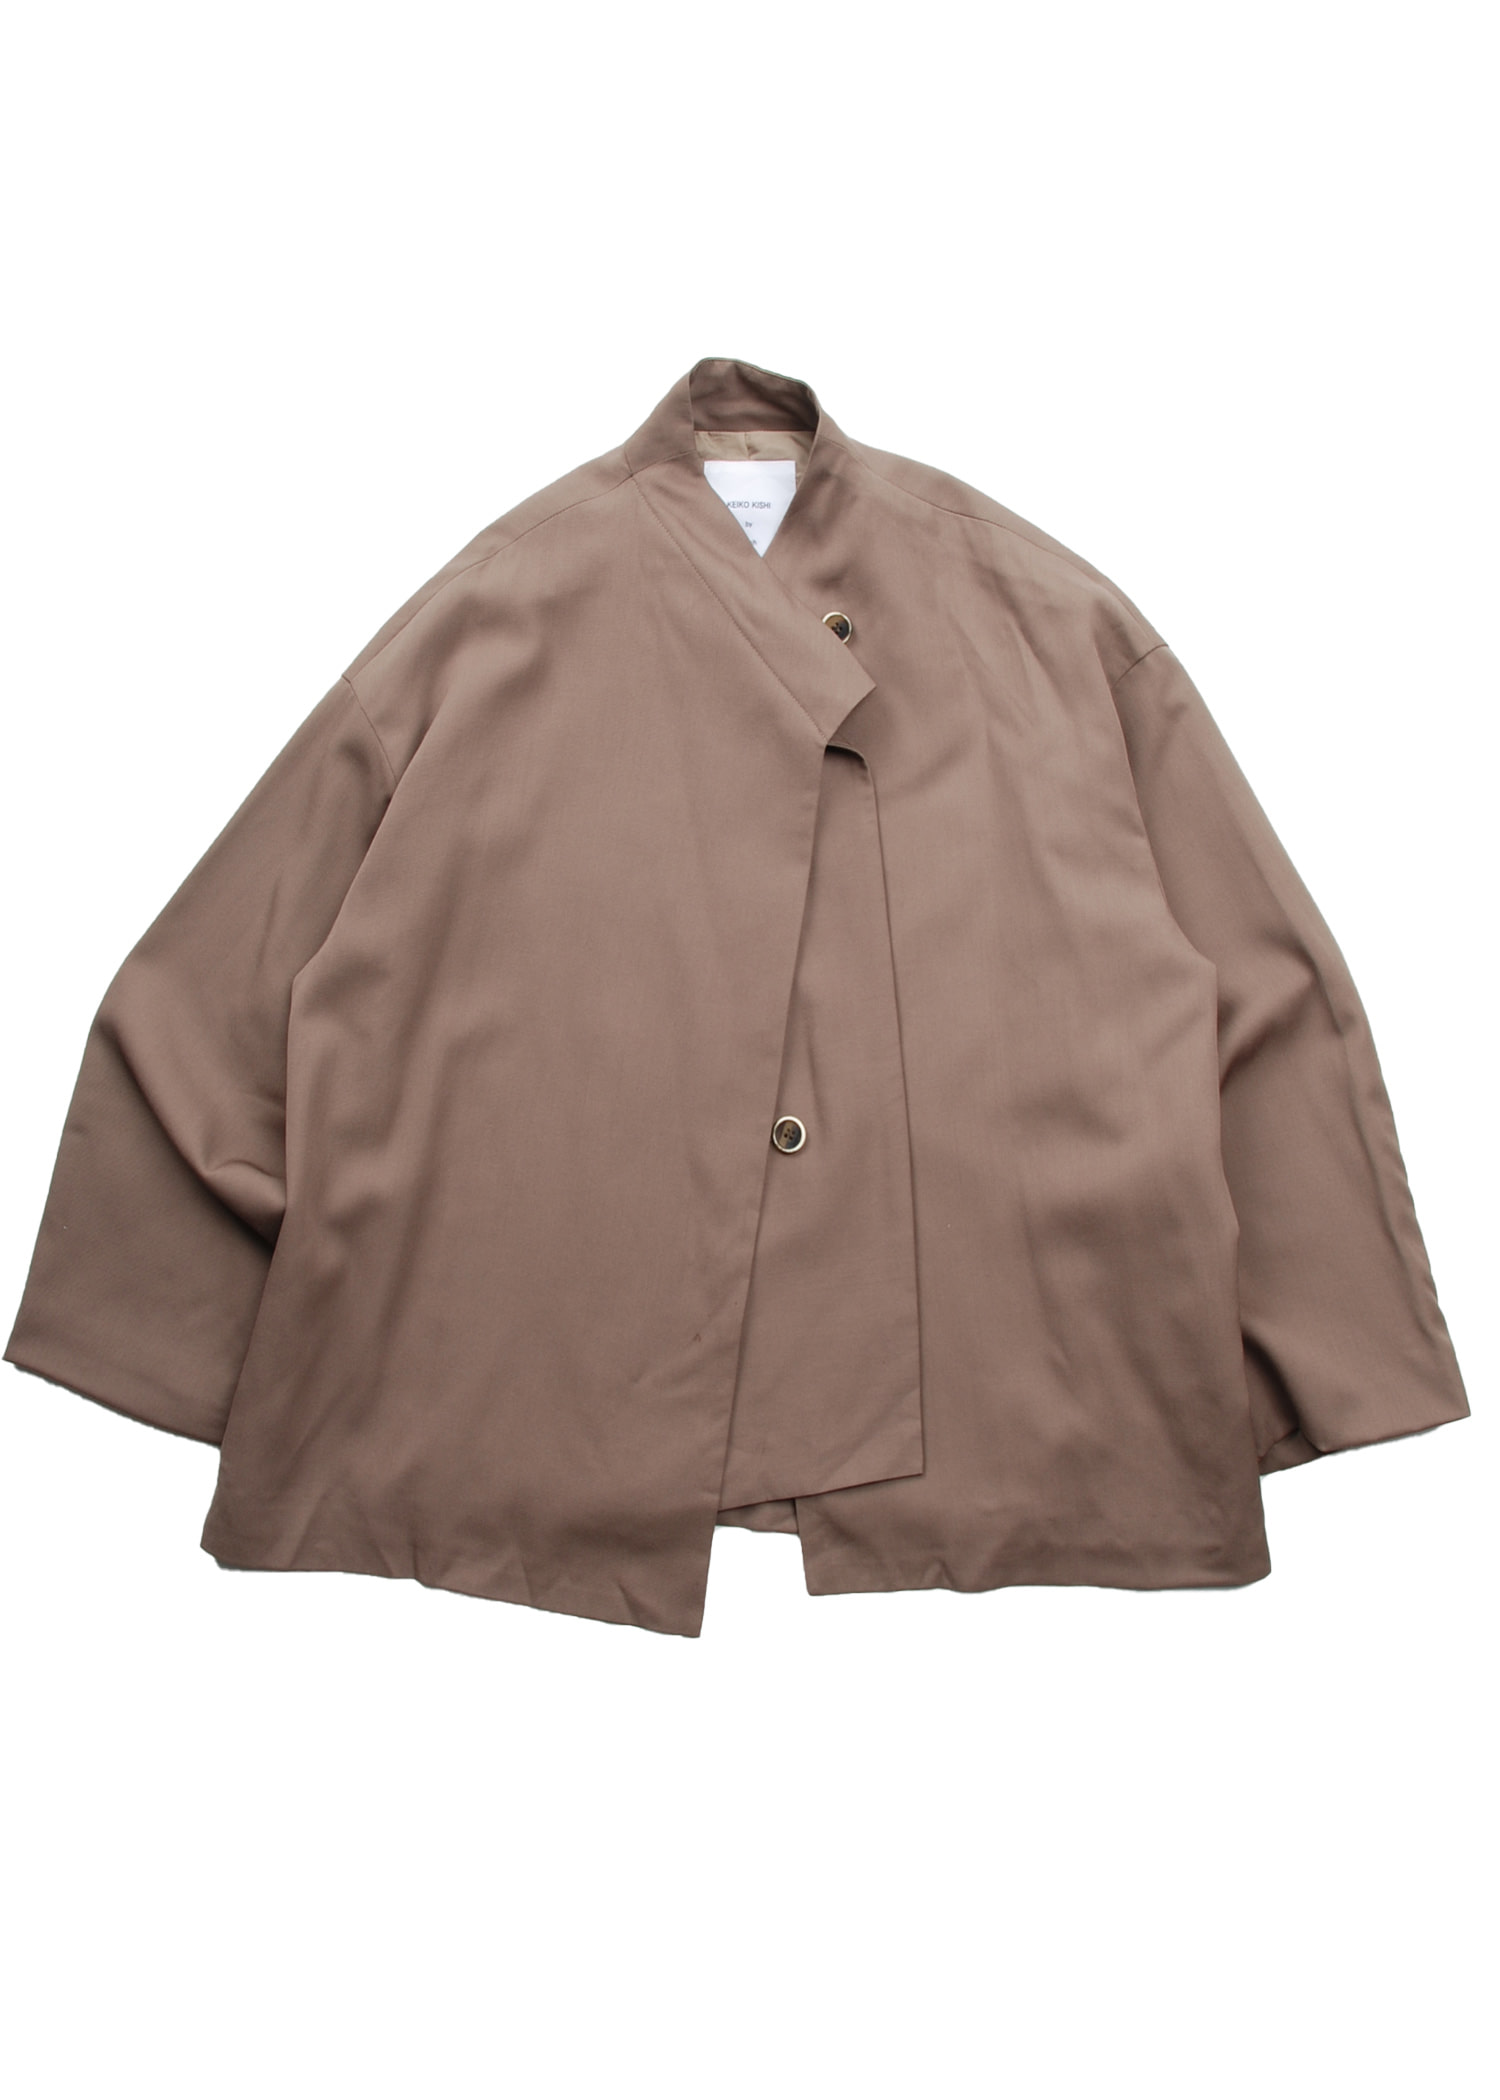 KEIKO KISHI unblanced shirts jacket